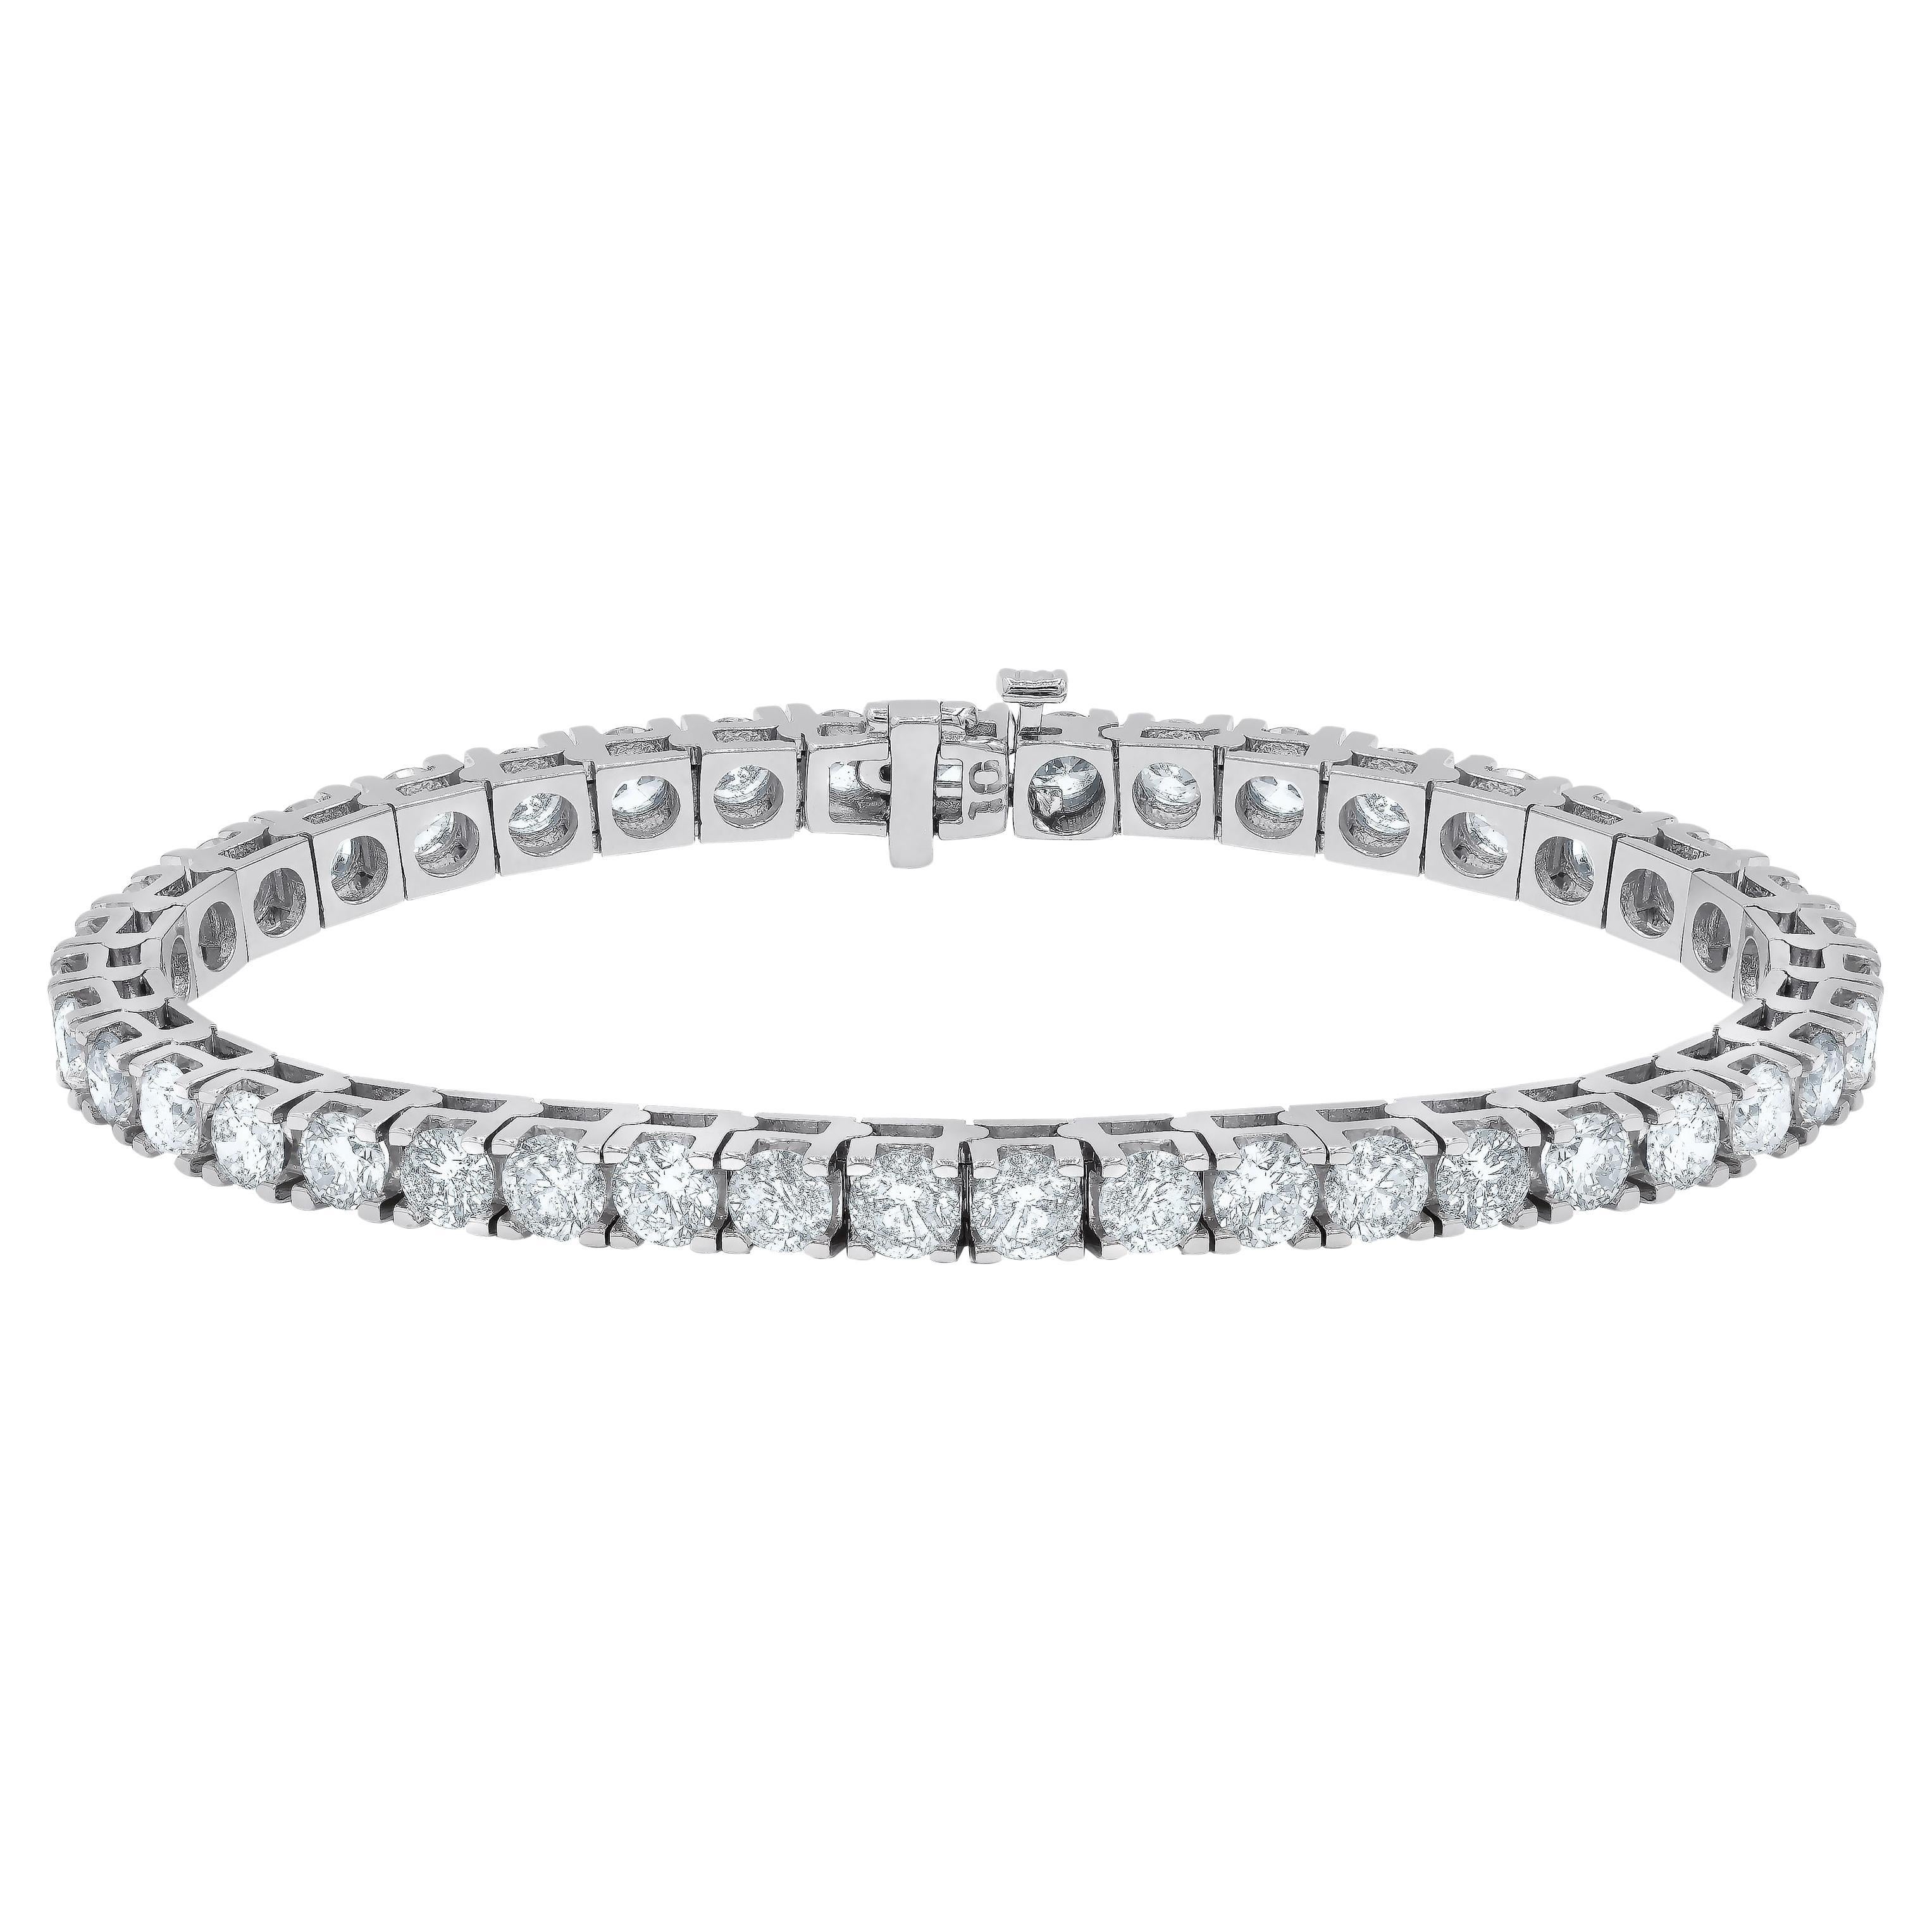 Diana M. Custom 8.00 cts round diamond tennis bracelet 14kt white gold